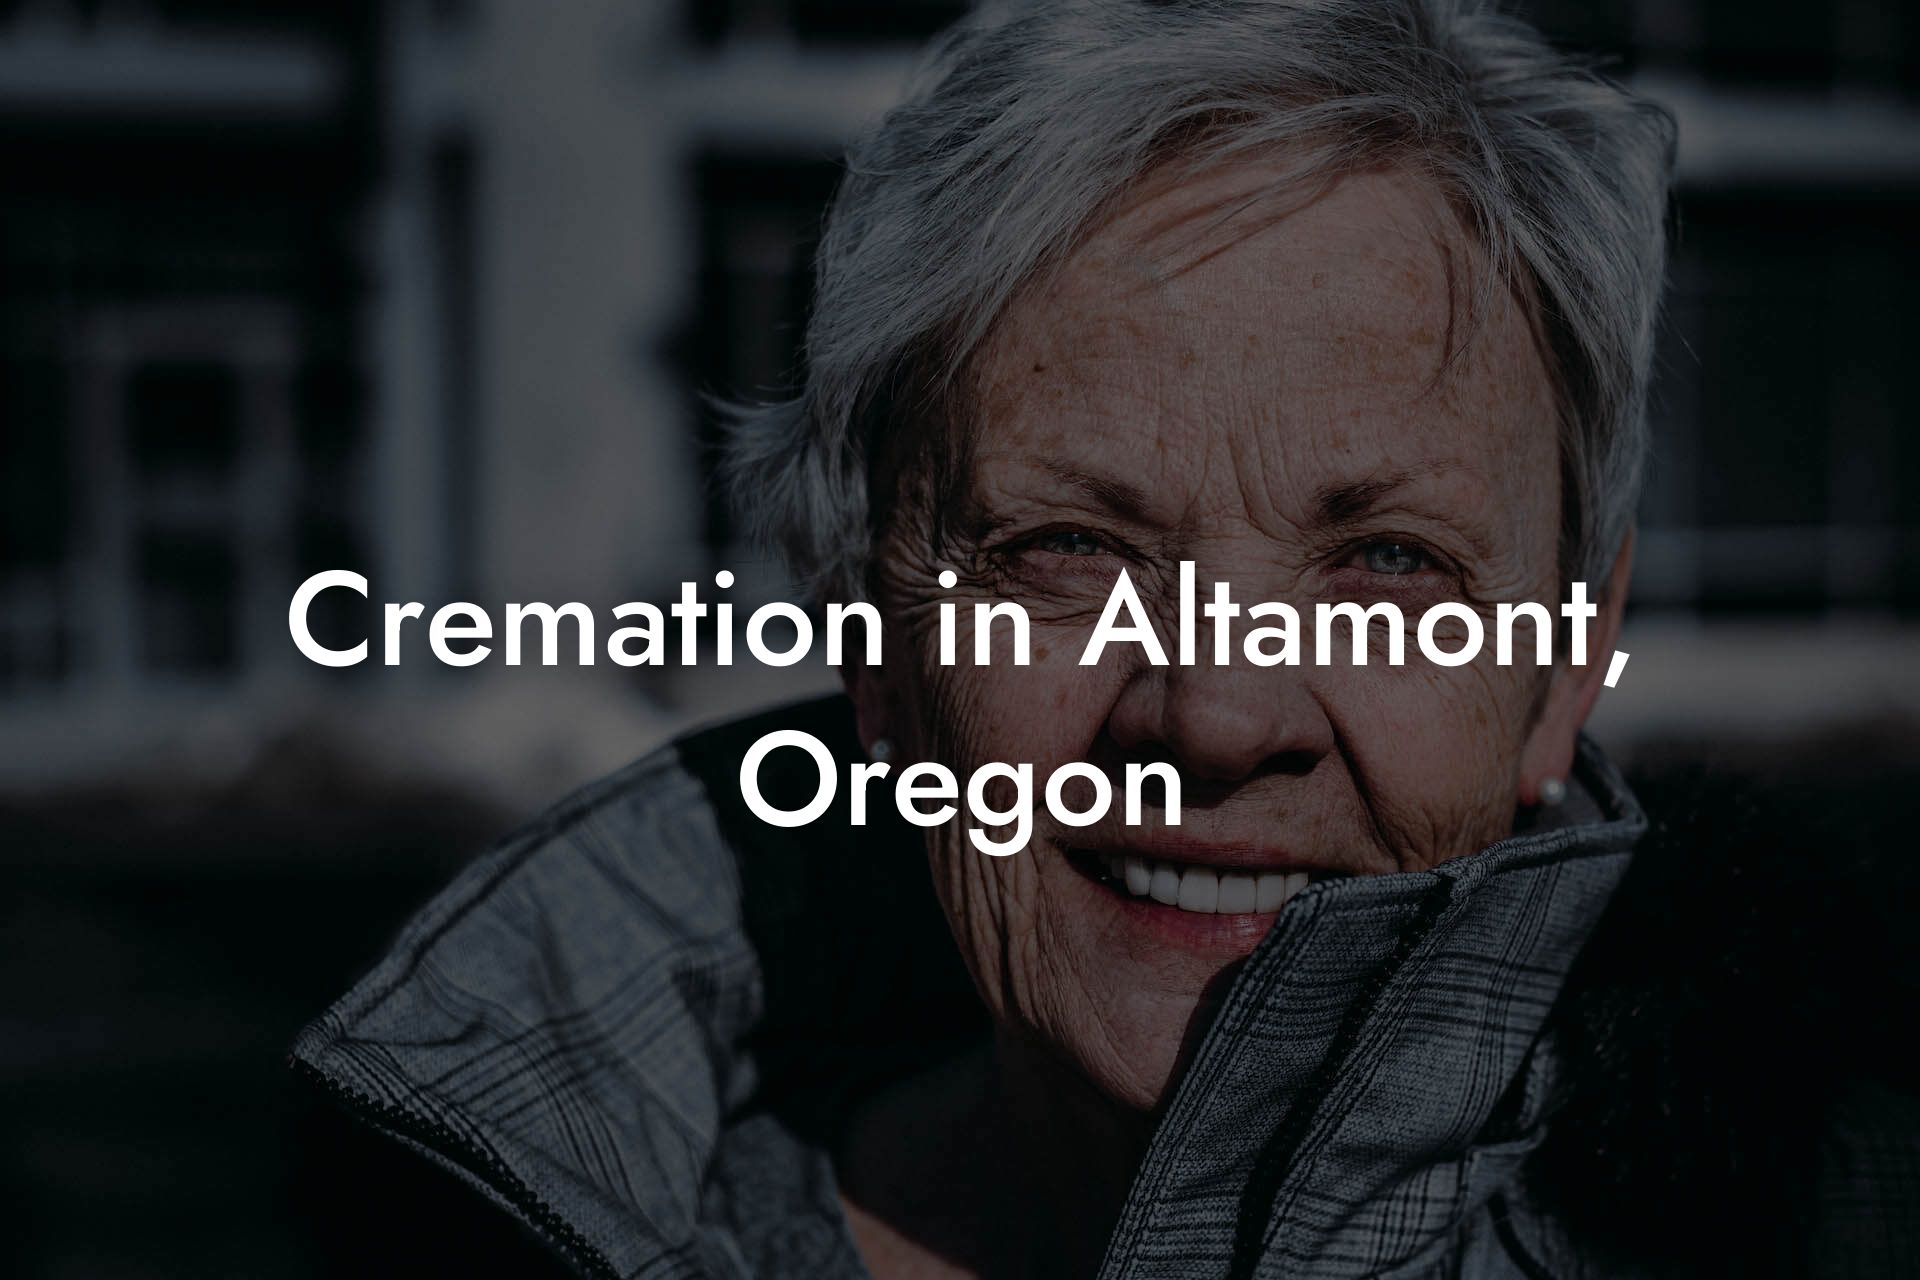 Cremation in Altamont, Oregon